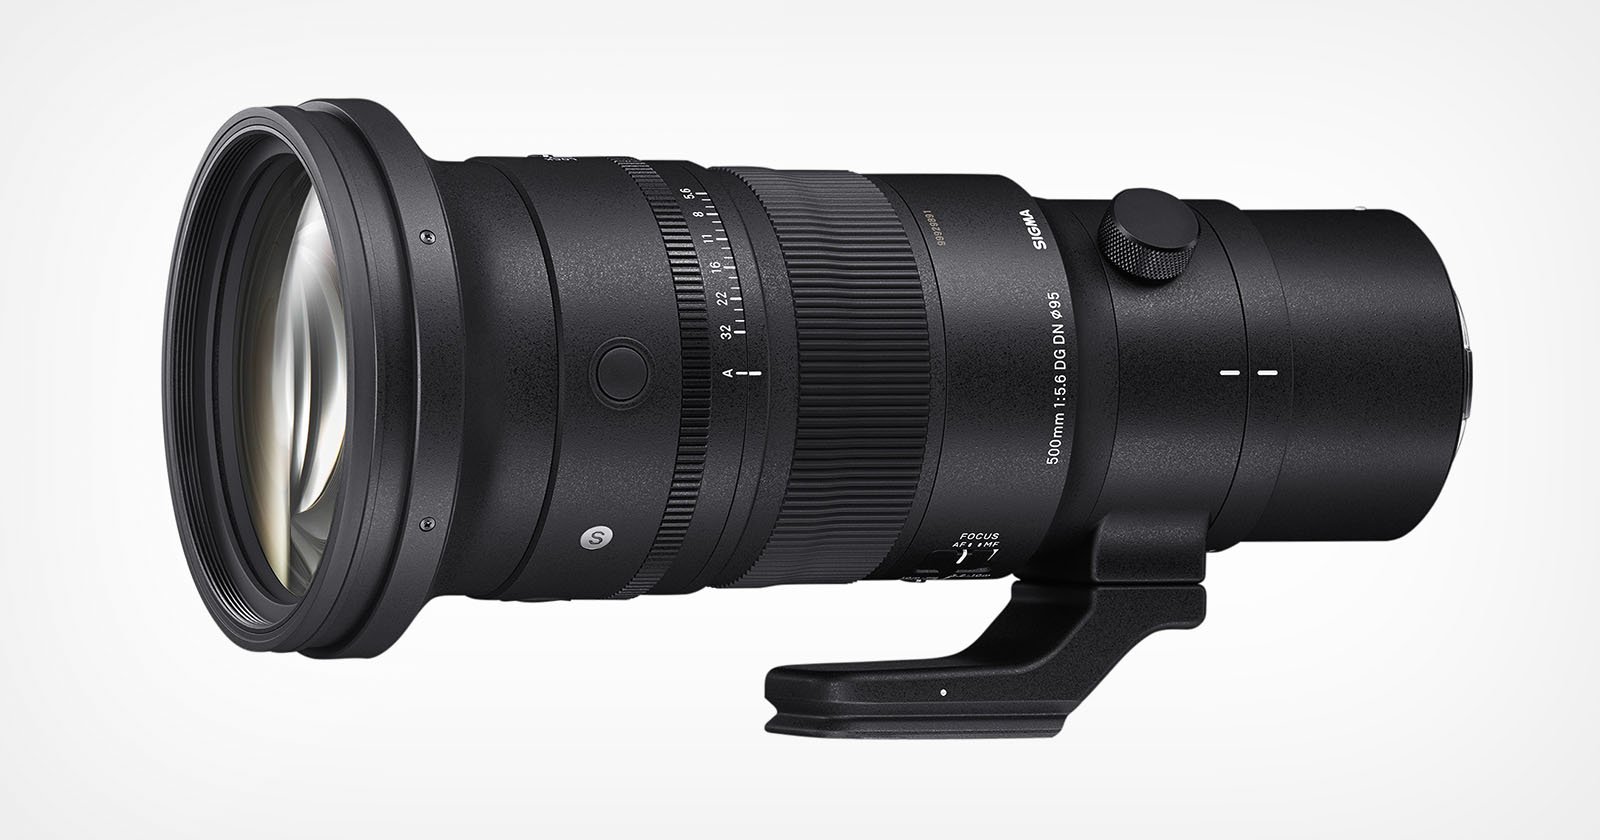  sigma 500mm lens popular can keep 